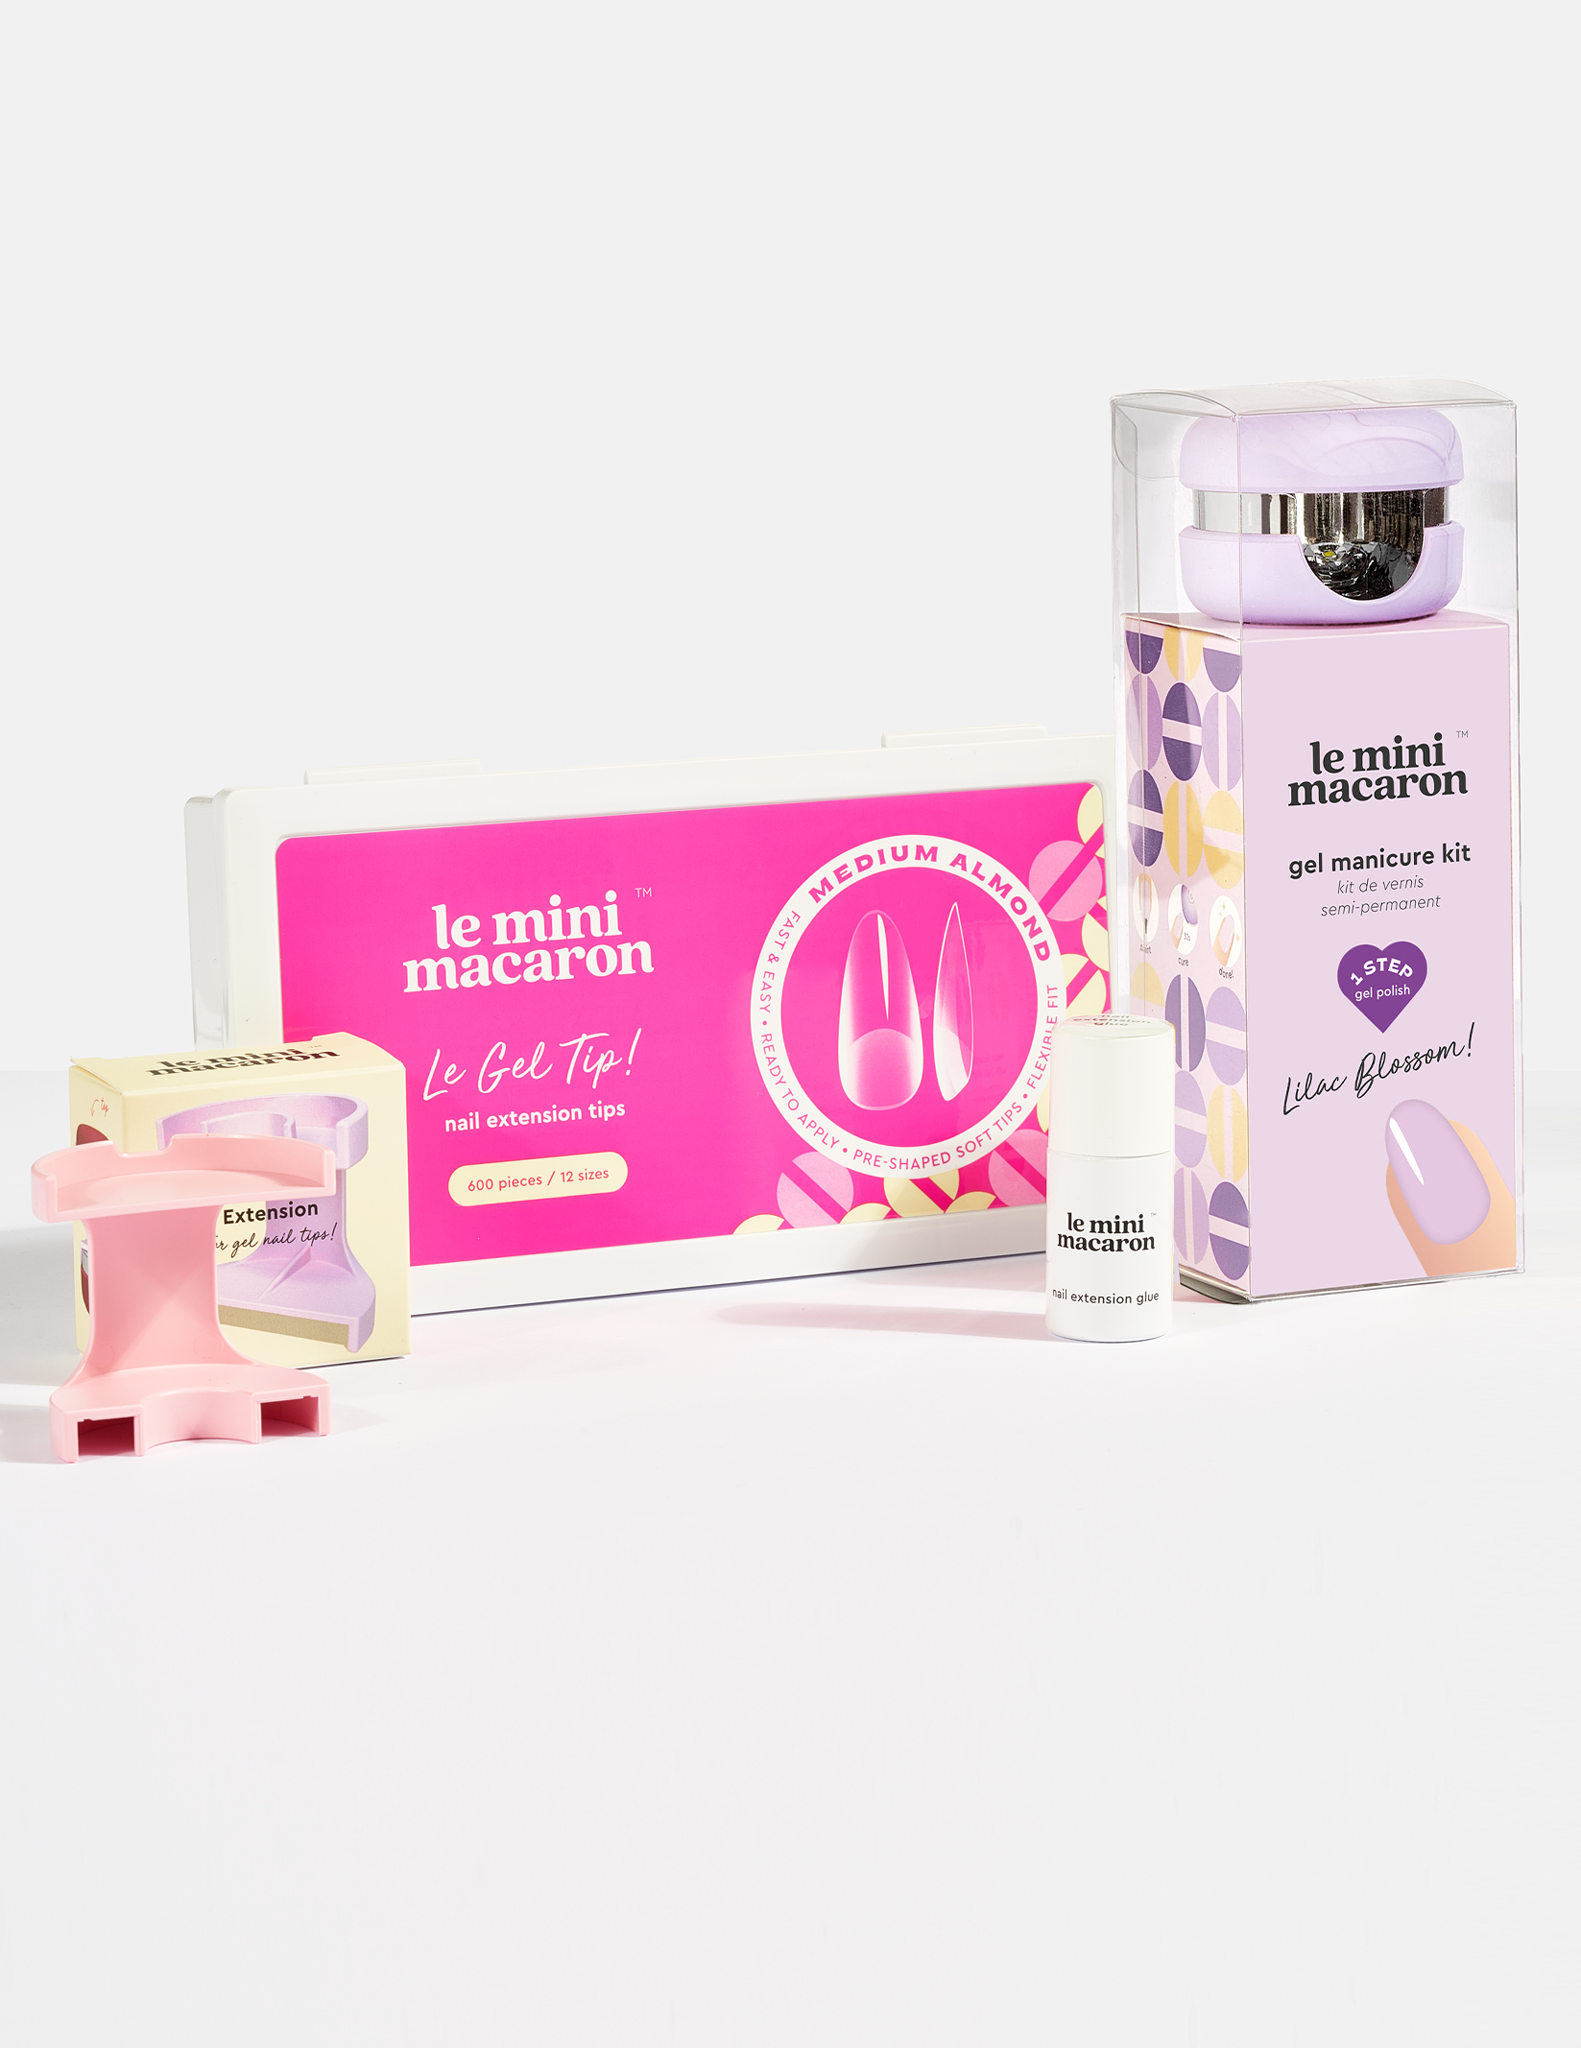 Lilac Blossom Kit + Le Gel tips + Glue